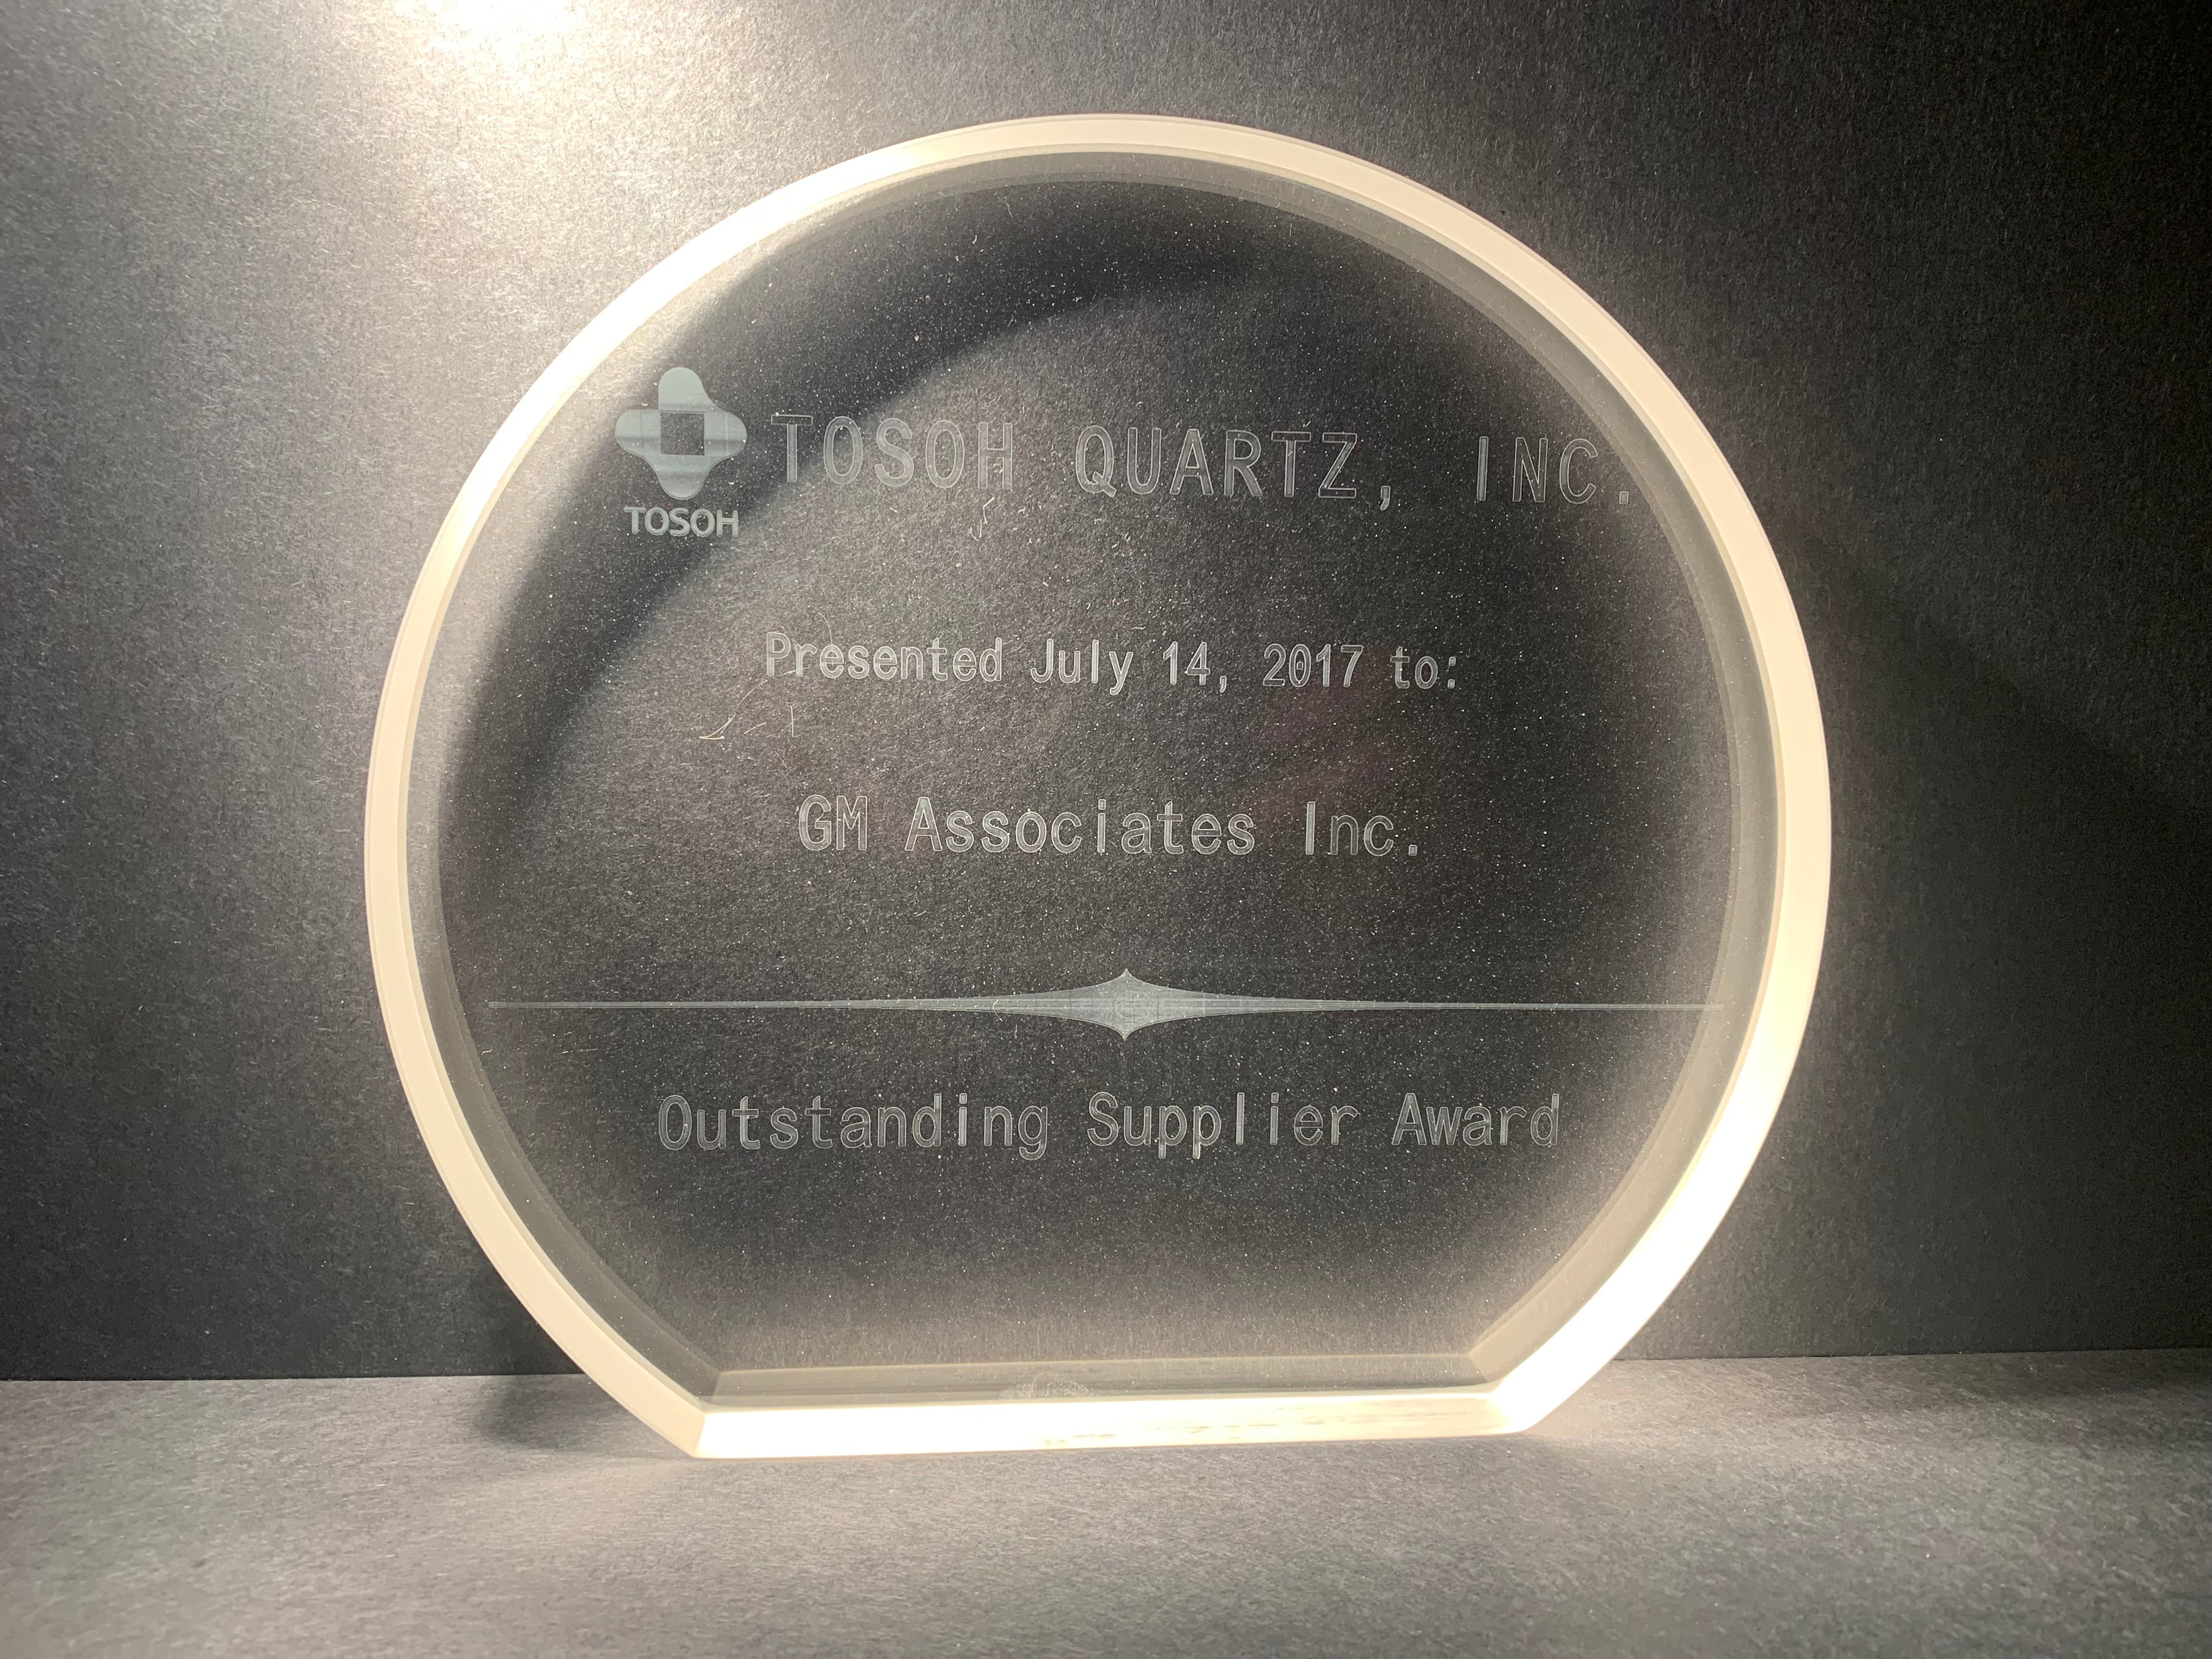 Tosoh Quartz Outstanding Supplier Award